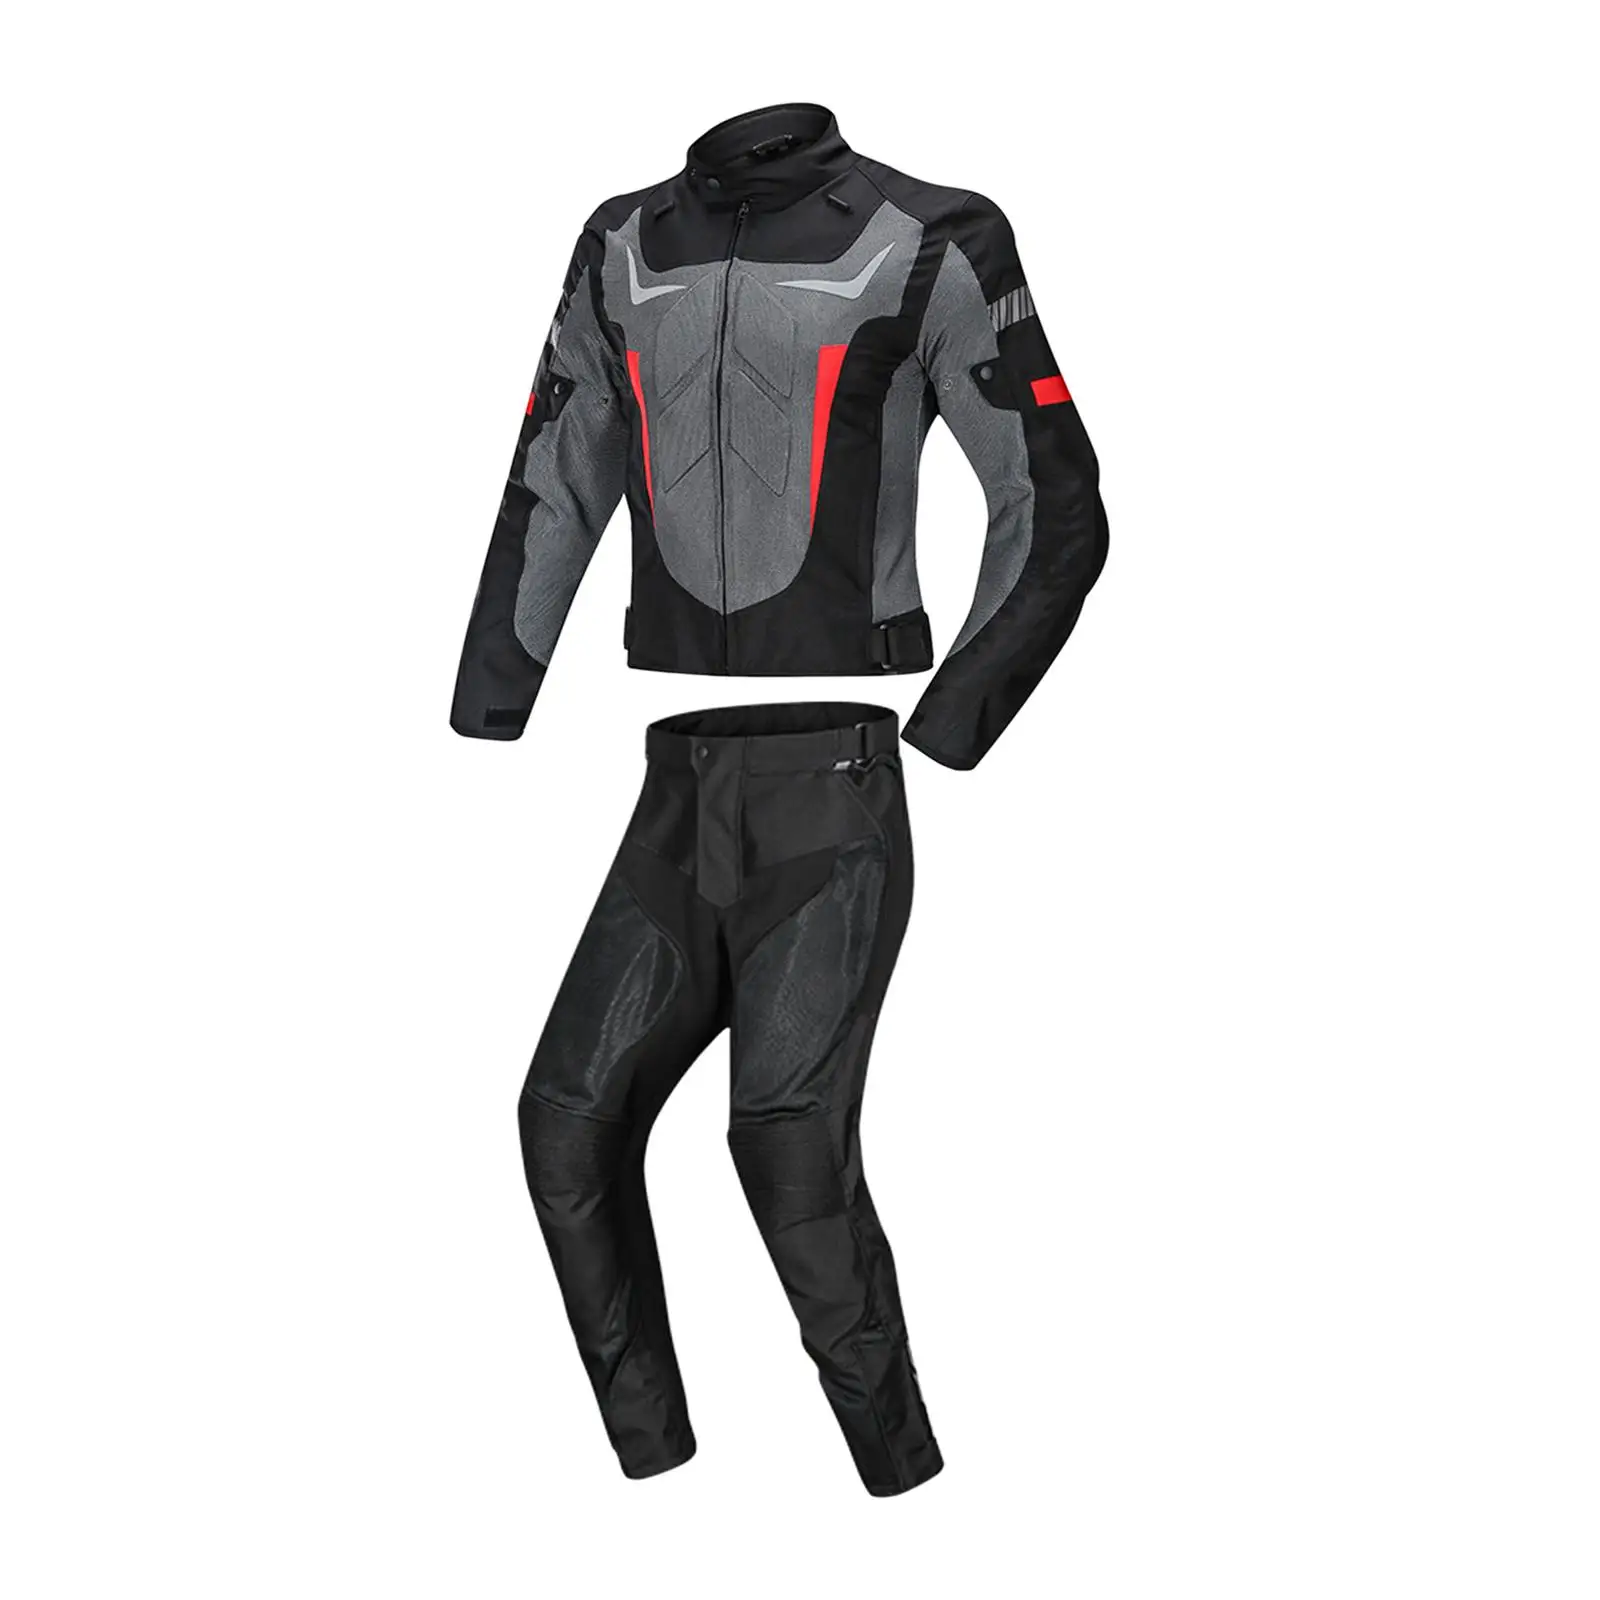 Waterproof motorcycle jacket pants suit protective padding riding jacket